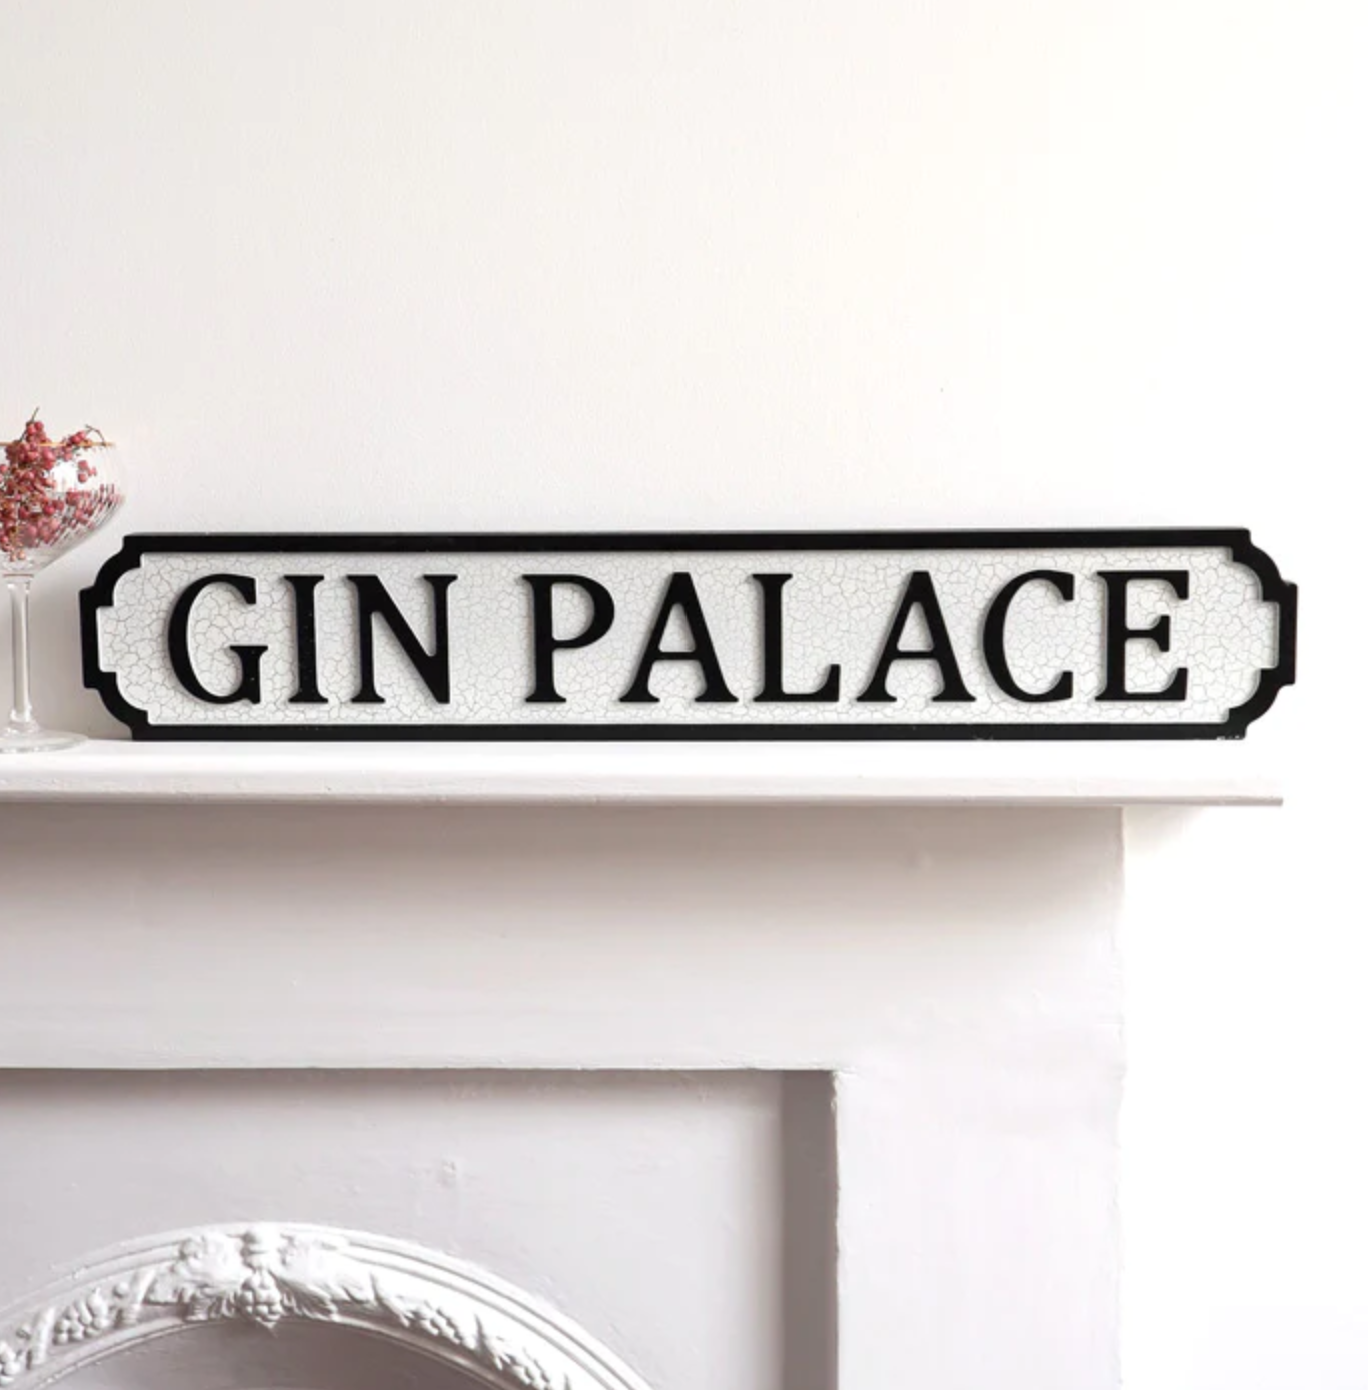 "Gin Palace" Sign